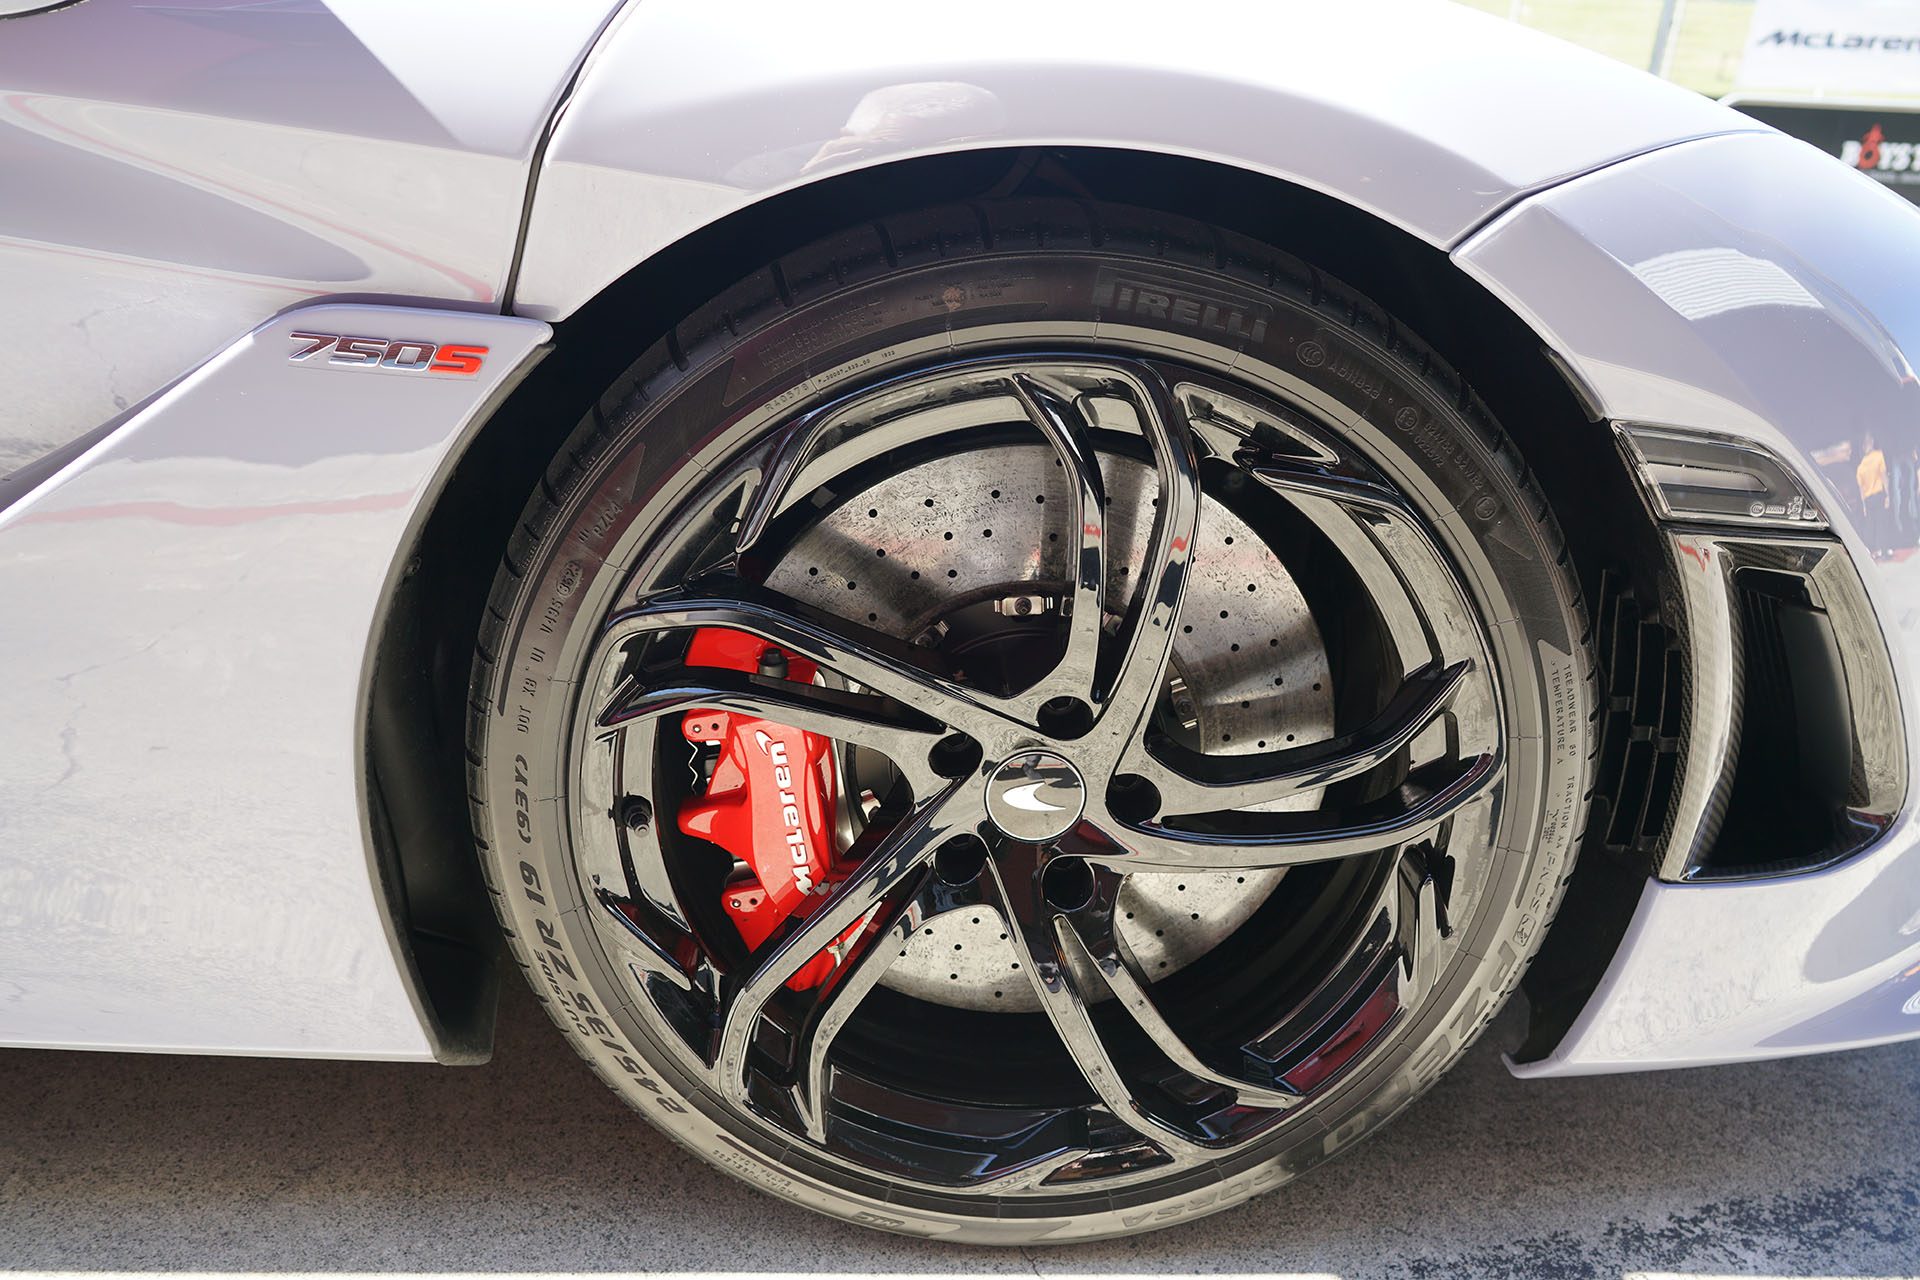 McLaren 750S has huge 380mm carbon fibre discs slowed by six-piston calipers.